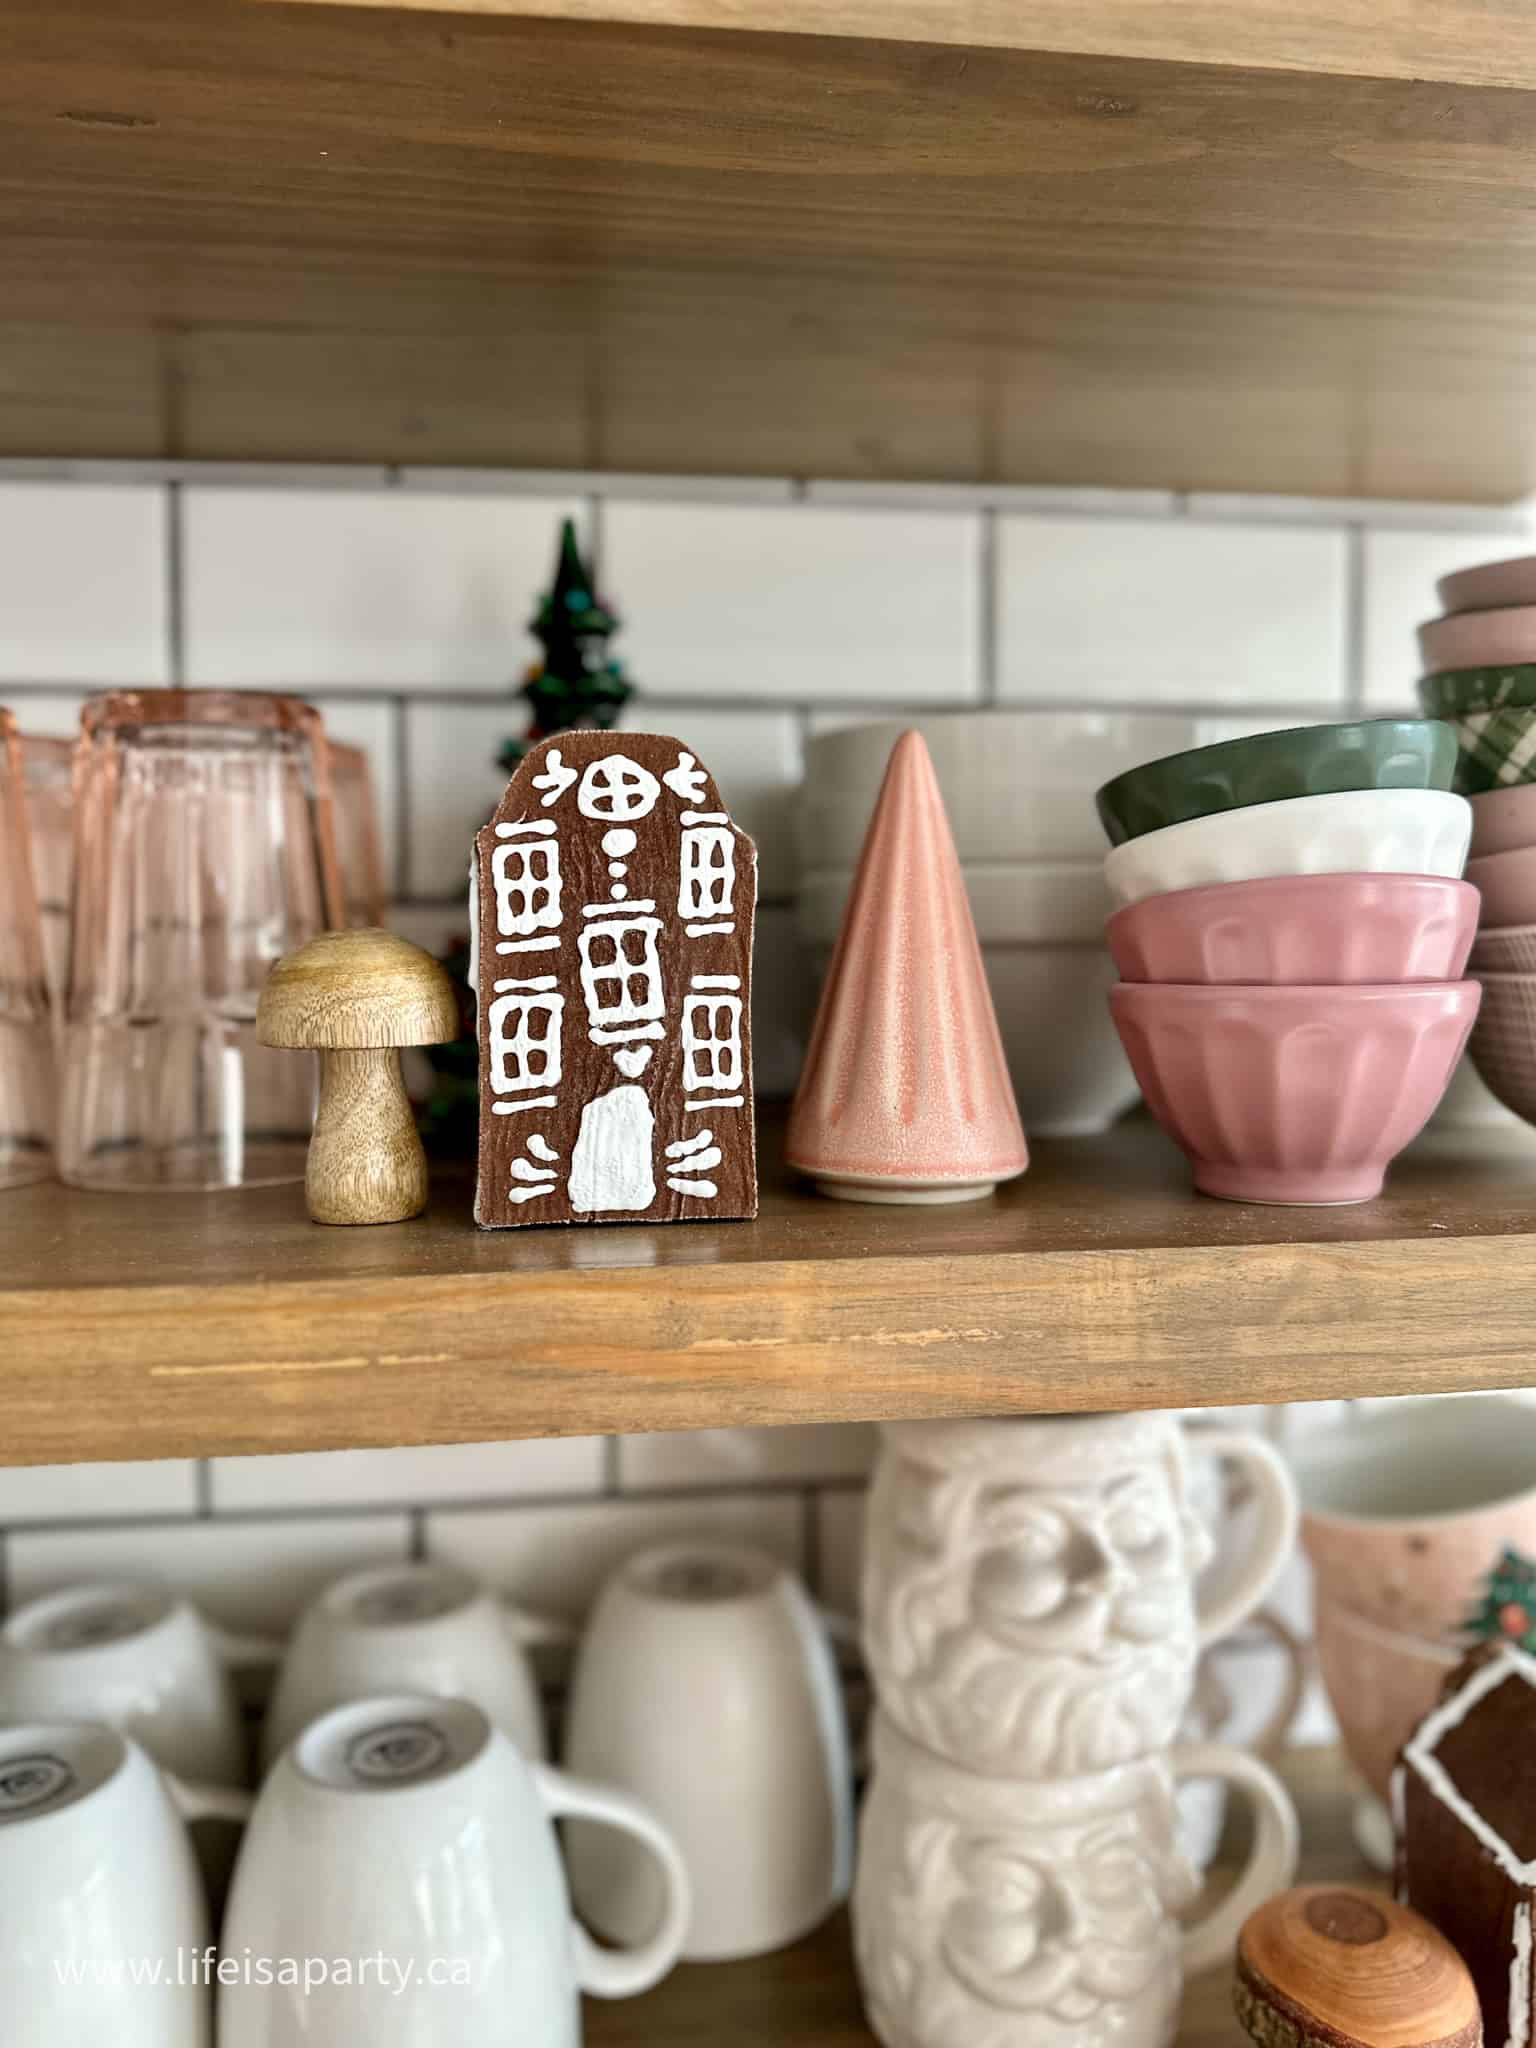 gingerbread house on kitchen shelves